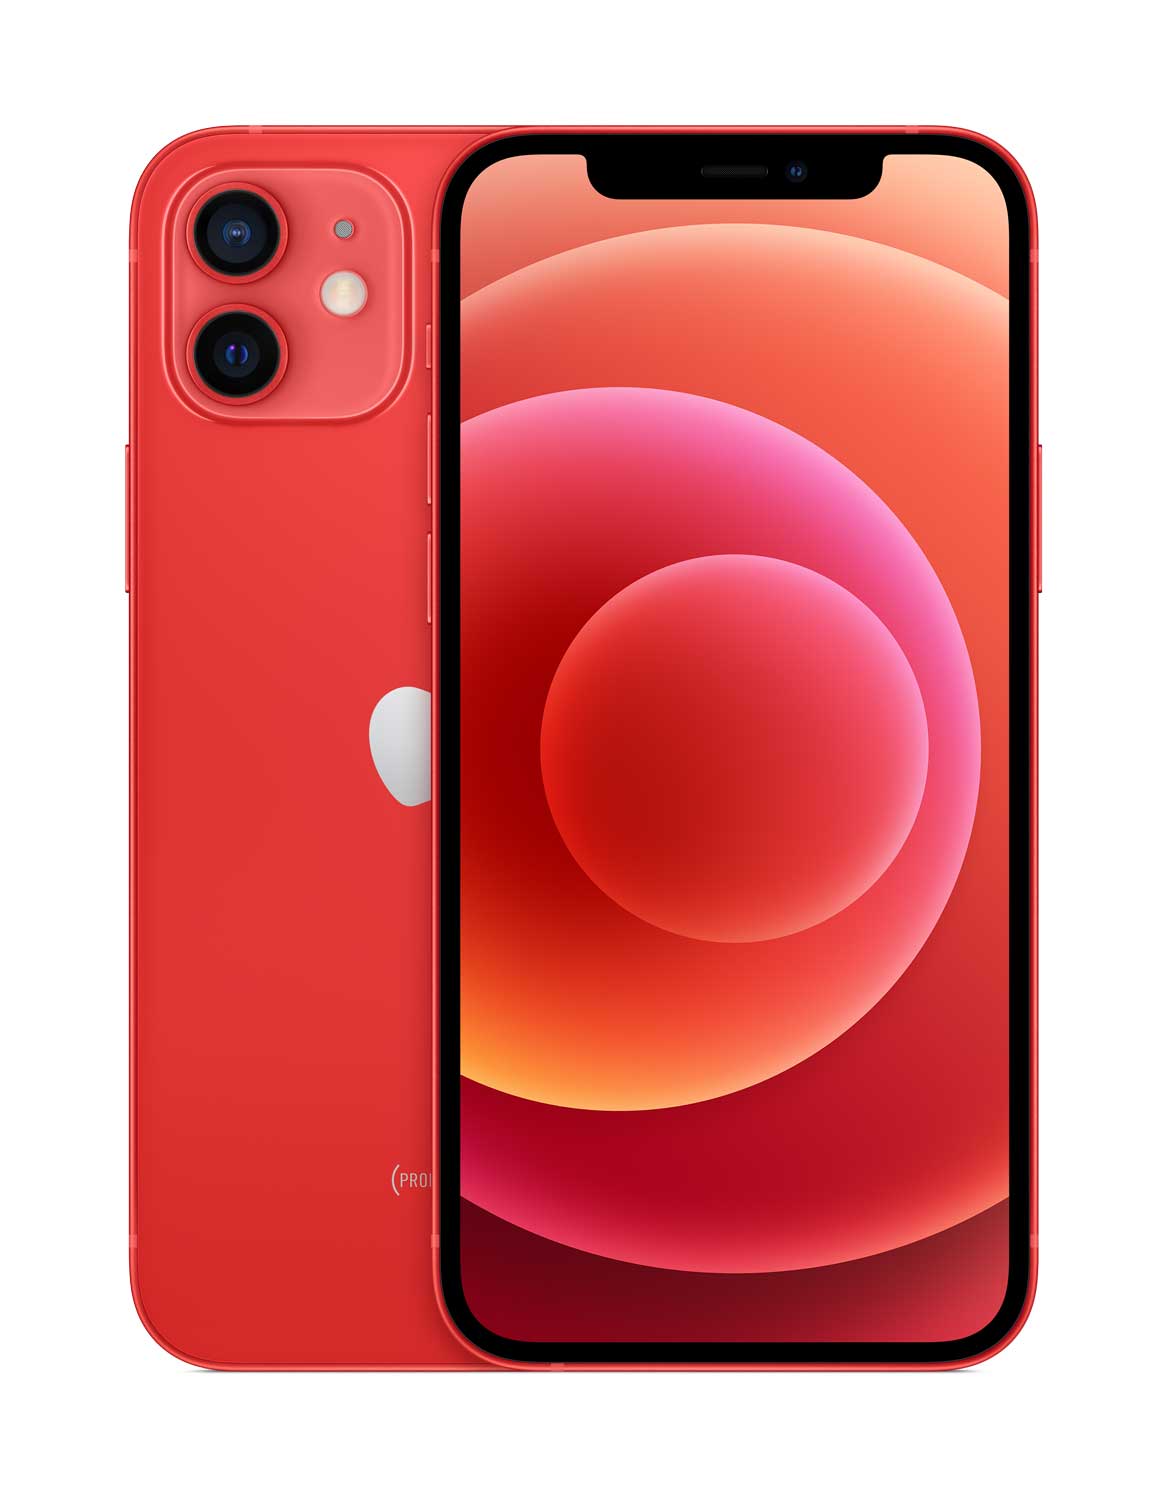 Apple iPhone 12 - (PRODUCT) RED - Smartphone - Dual-SIM - 5G NR - 64GB - CDMA / GSM - 6.1 - 2532 x 1170 Pixel (460 ppi (Pixel pro )) - Super Retina XDR Display (12 MP Vorderkamera) - 2 x Rückkamera - Rot (MGJ73ZD/A)